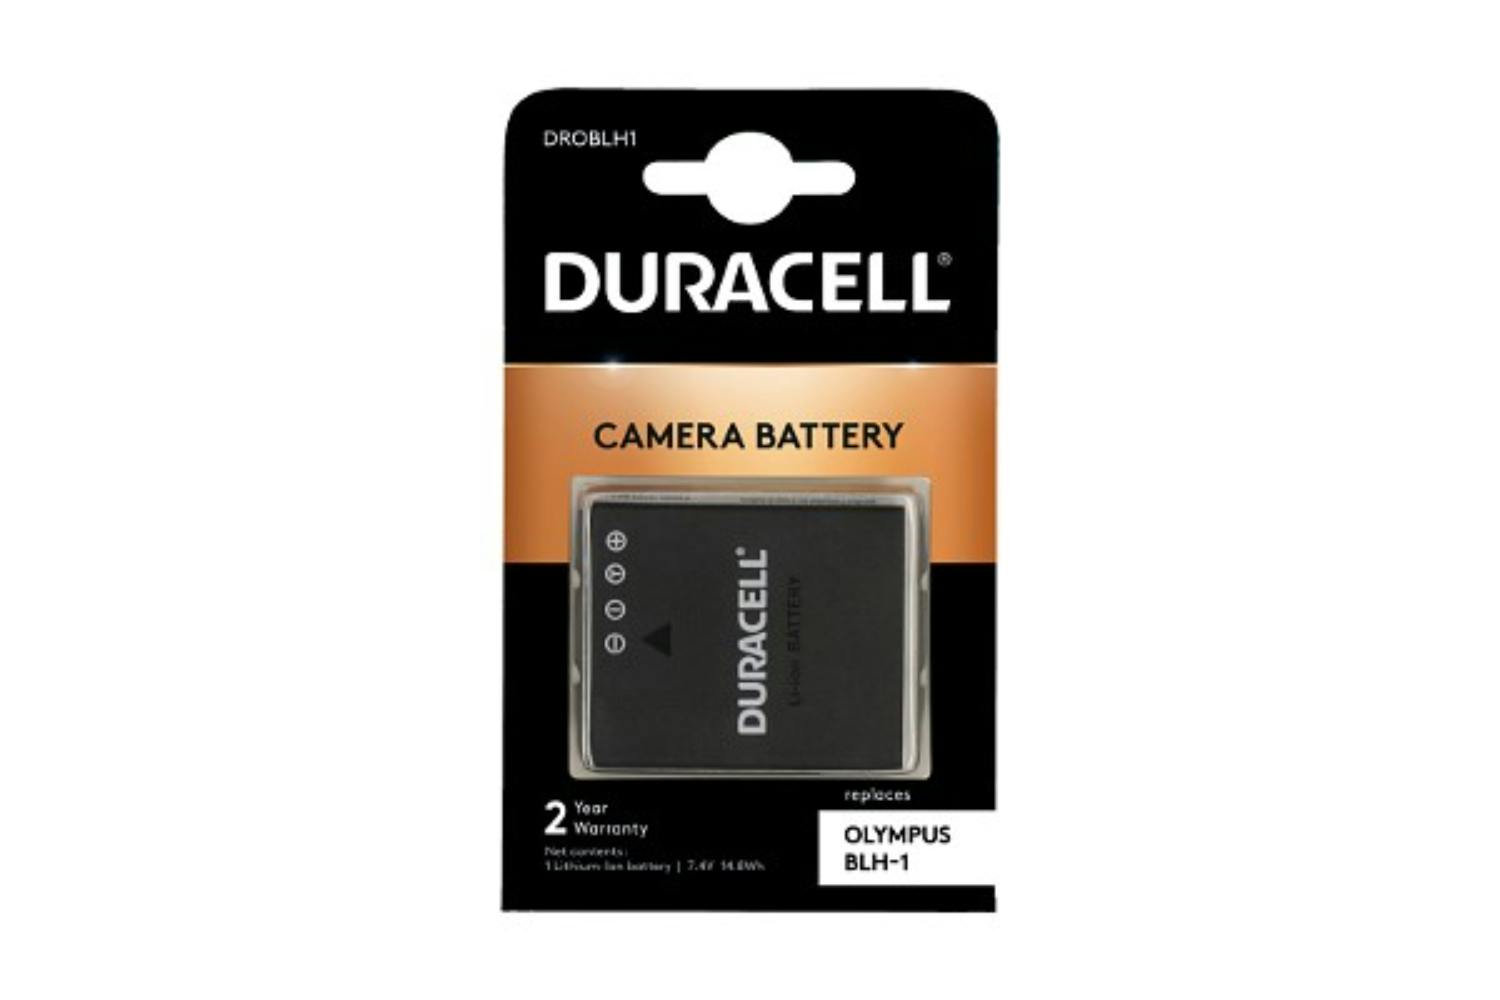 Duracell DROBLH1 2000mAh Camera Battery